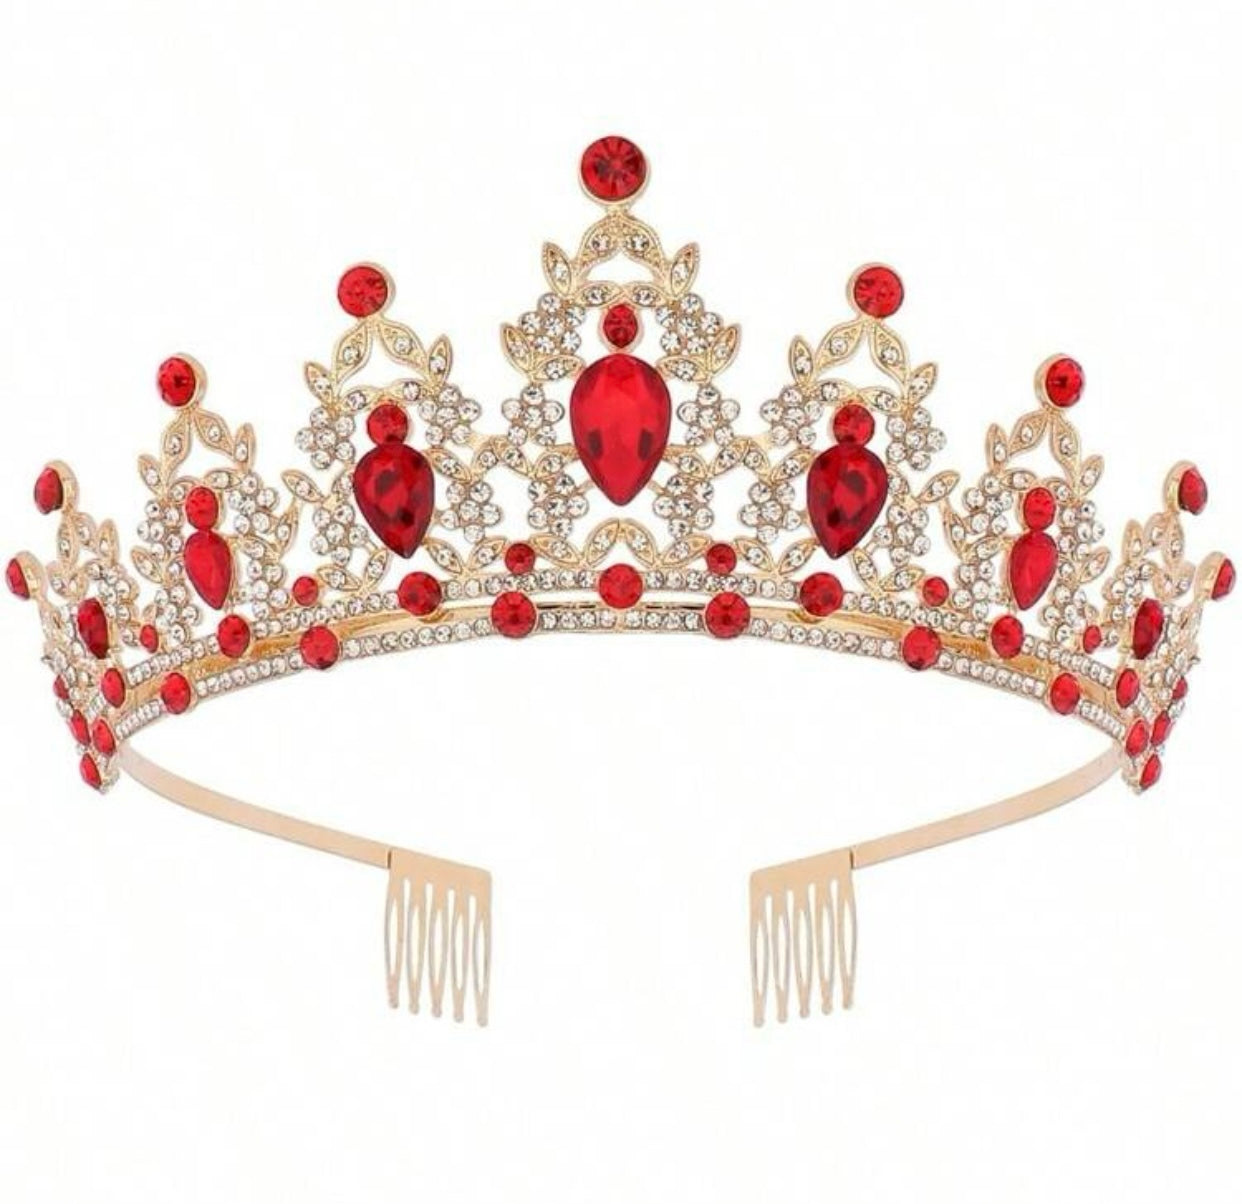 Red Rhinestone Tiara, Crown, Prom, Wedding, Dancing, Metal Tiara